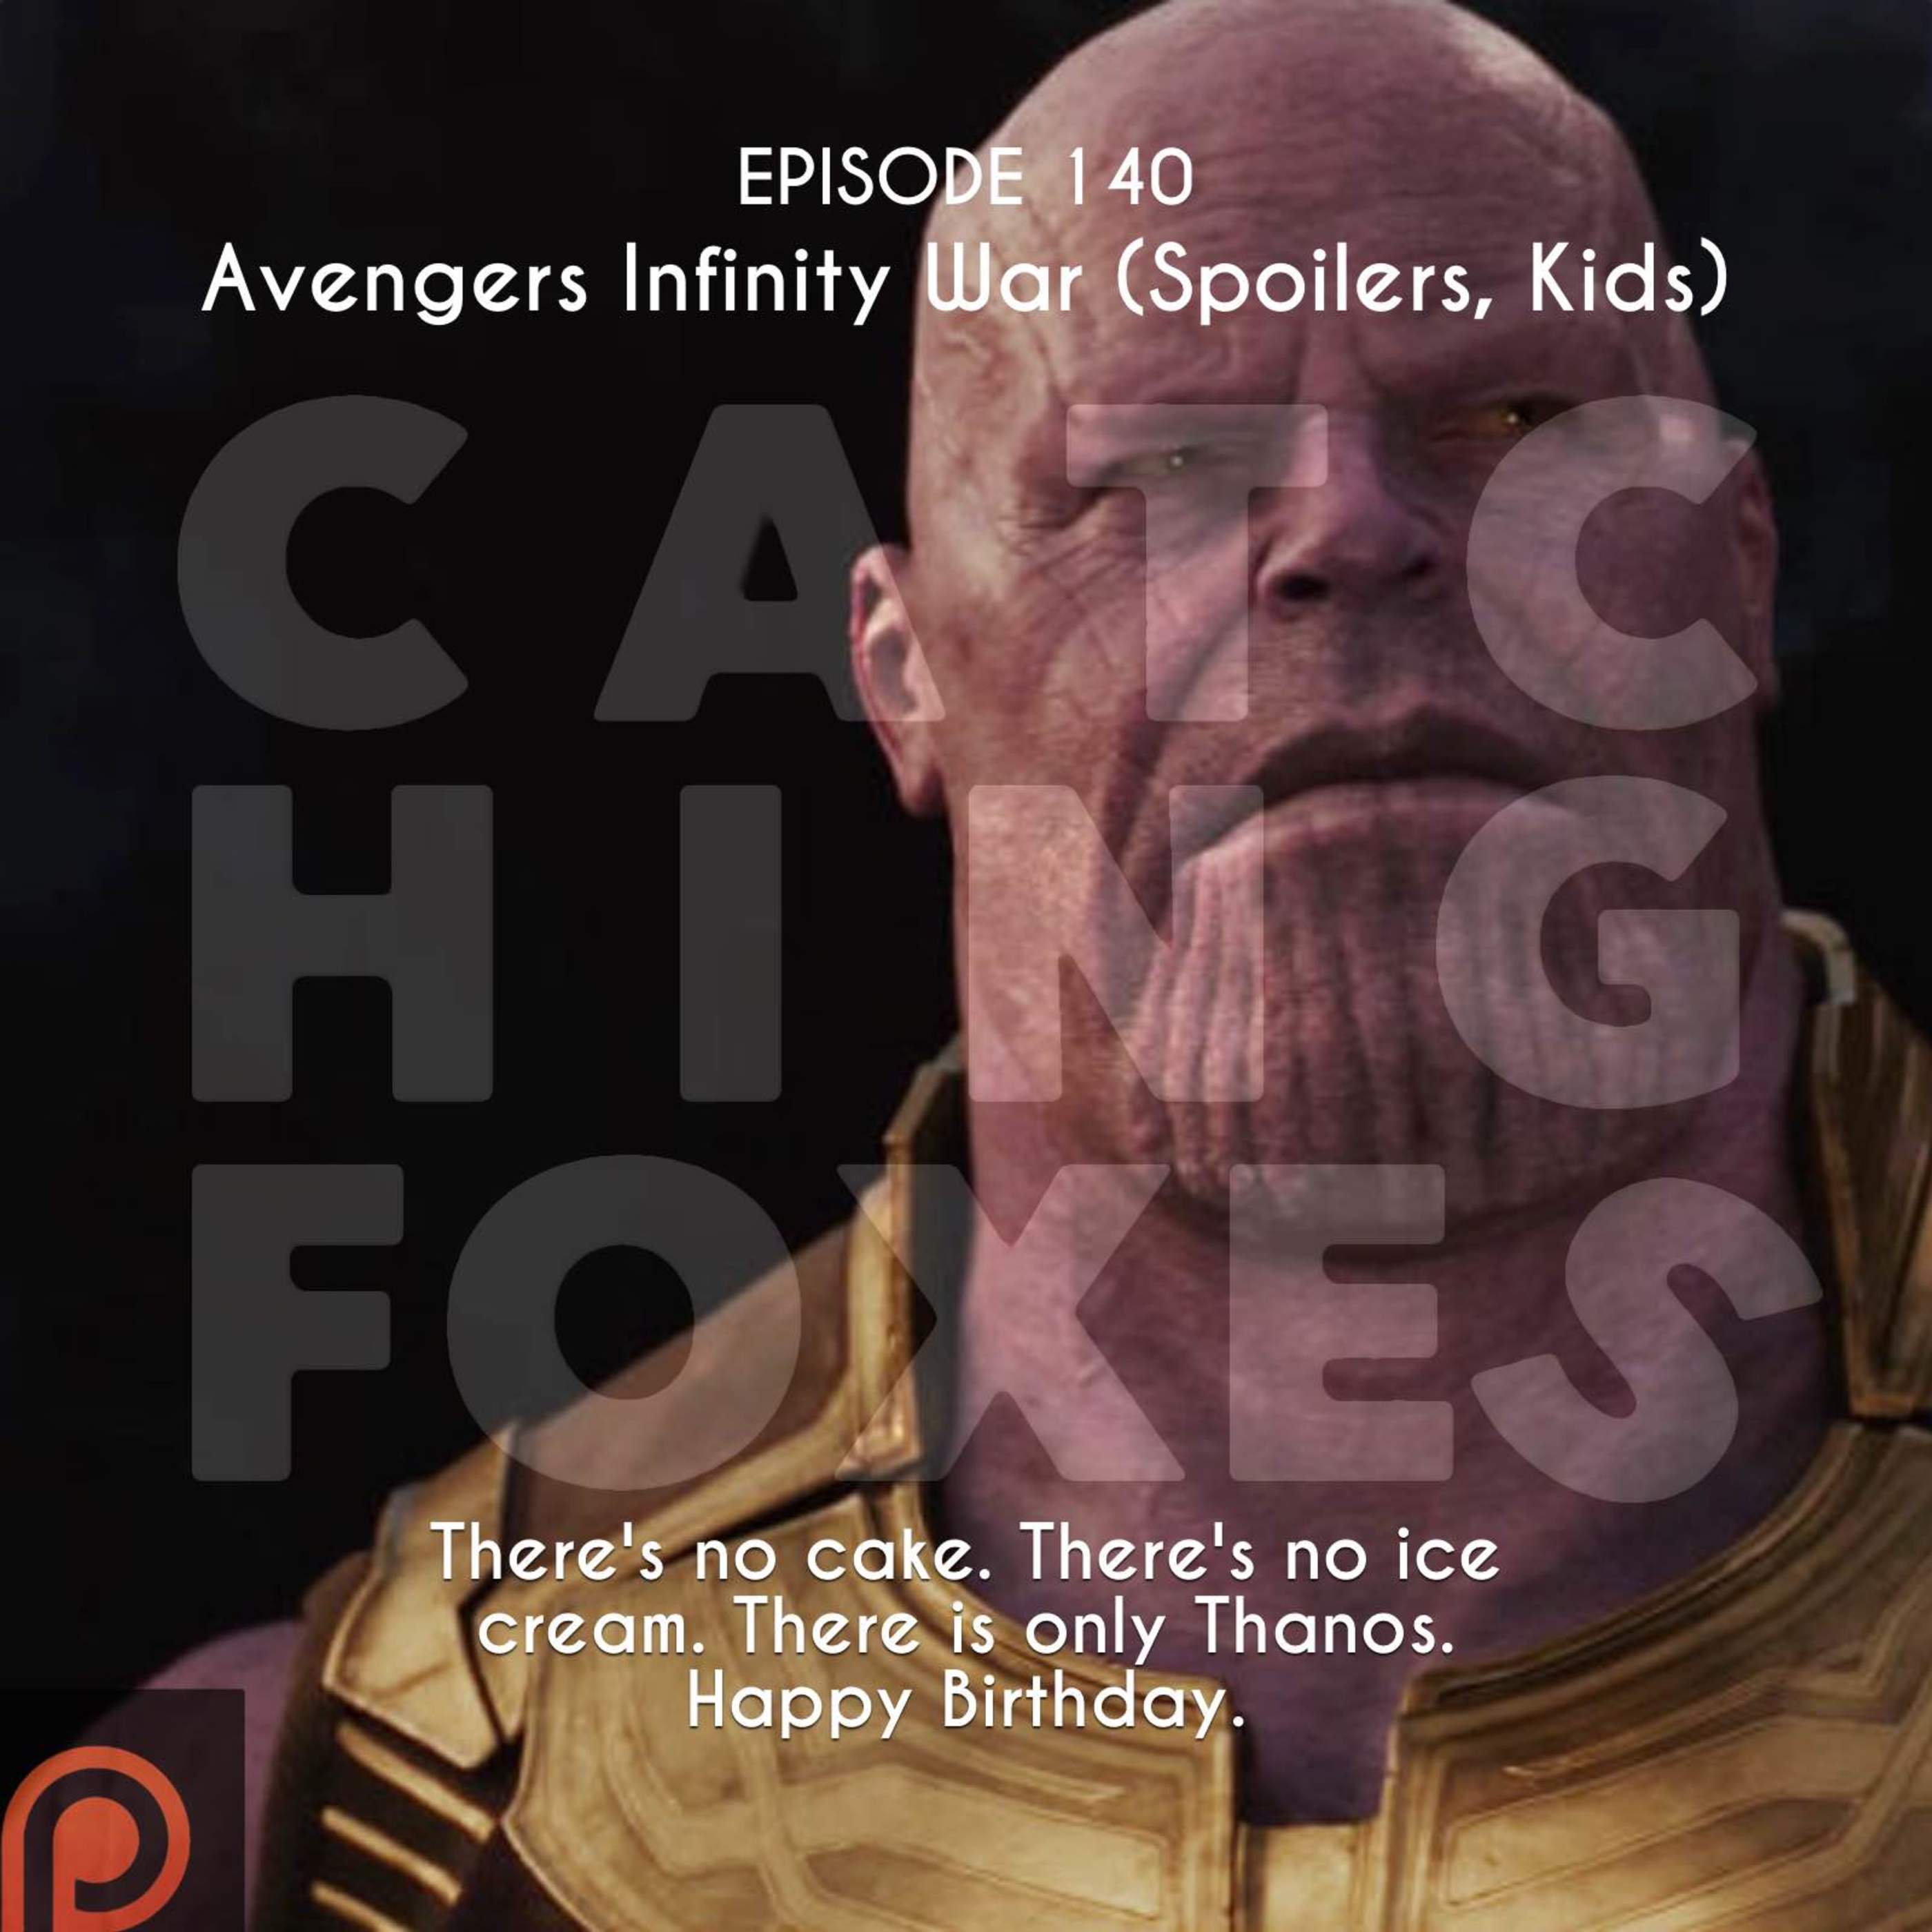 Avengers Infinity War (spoilers, kids)